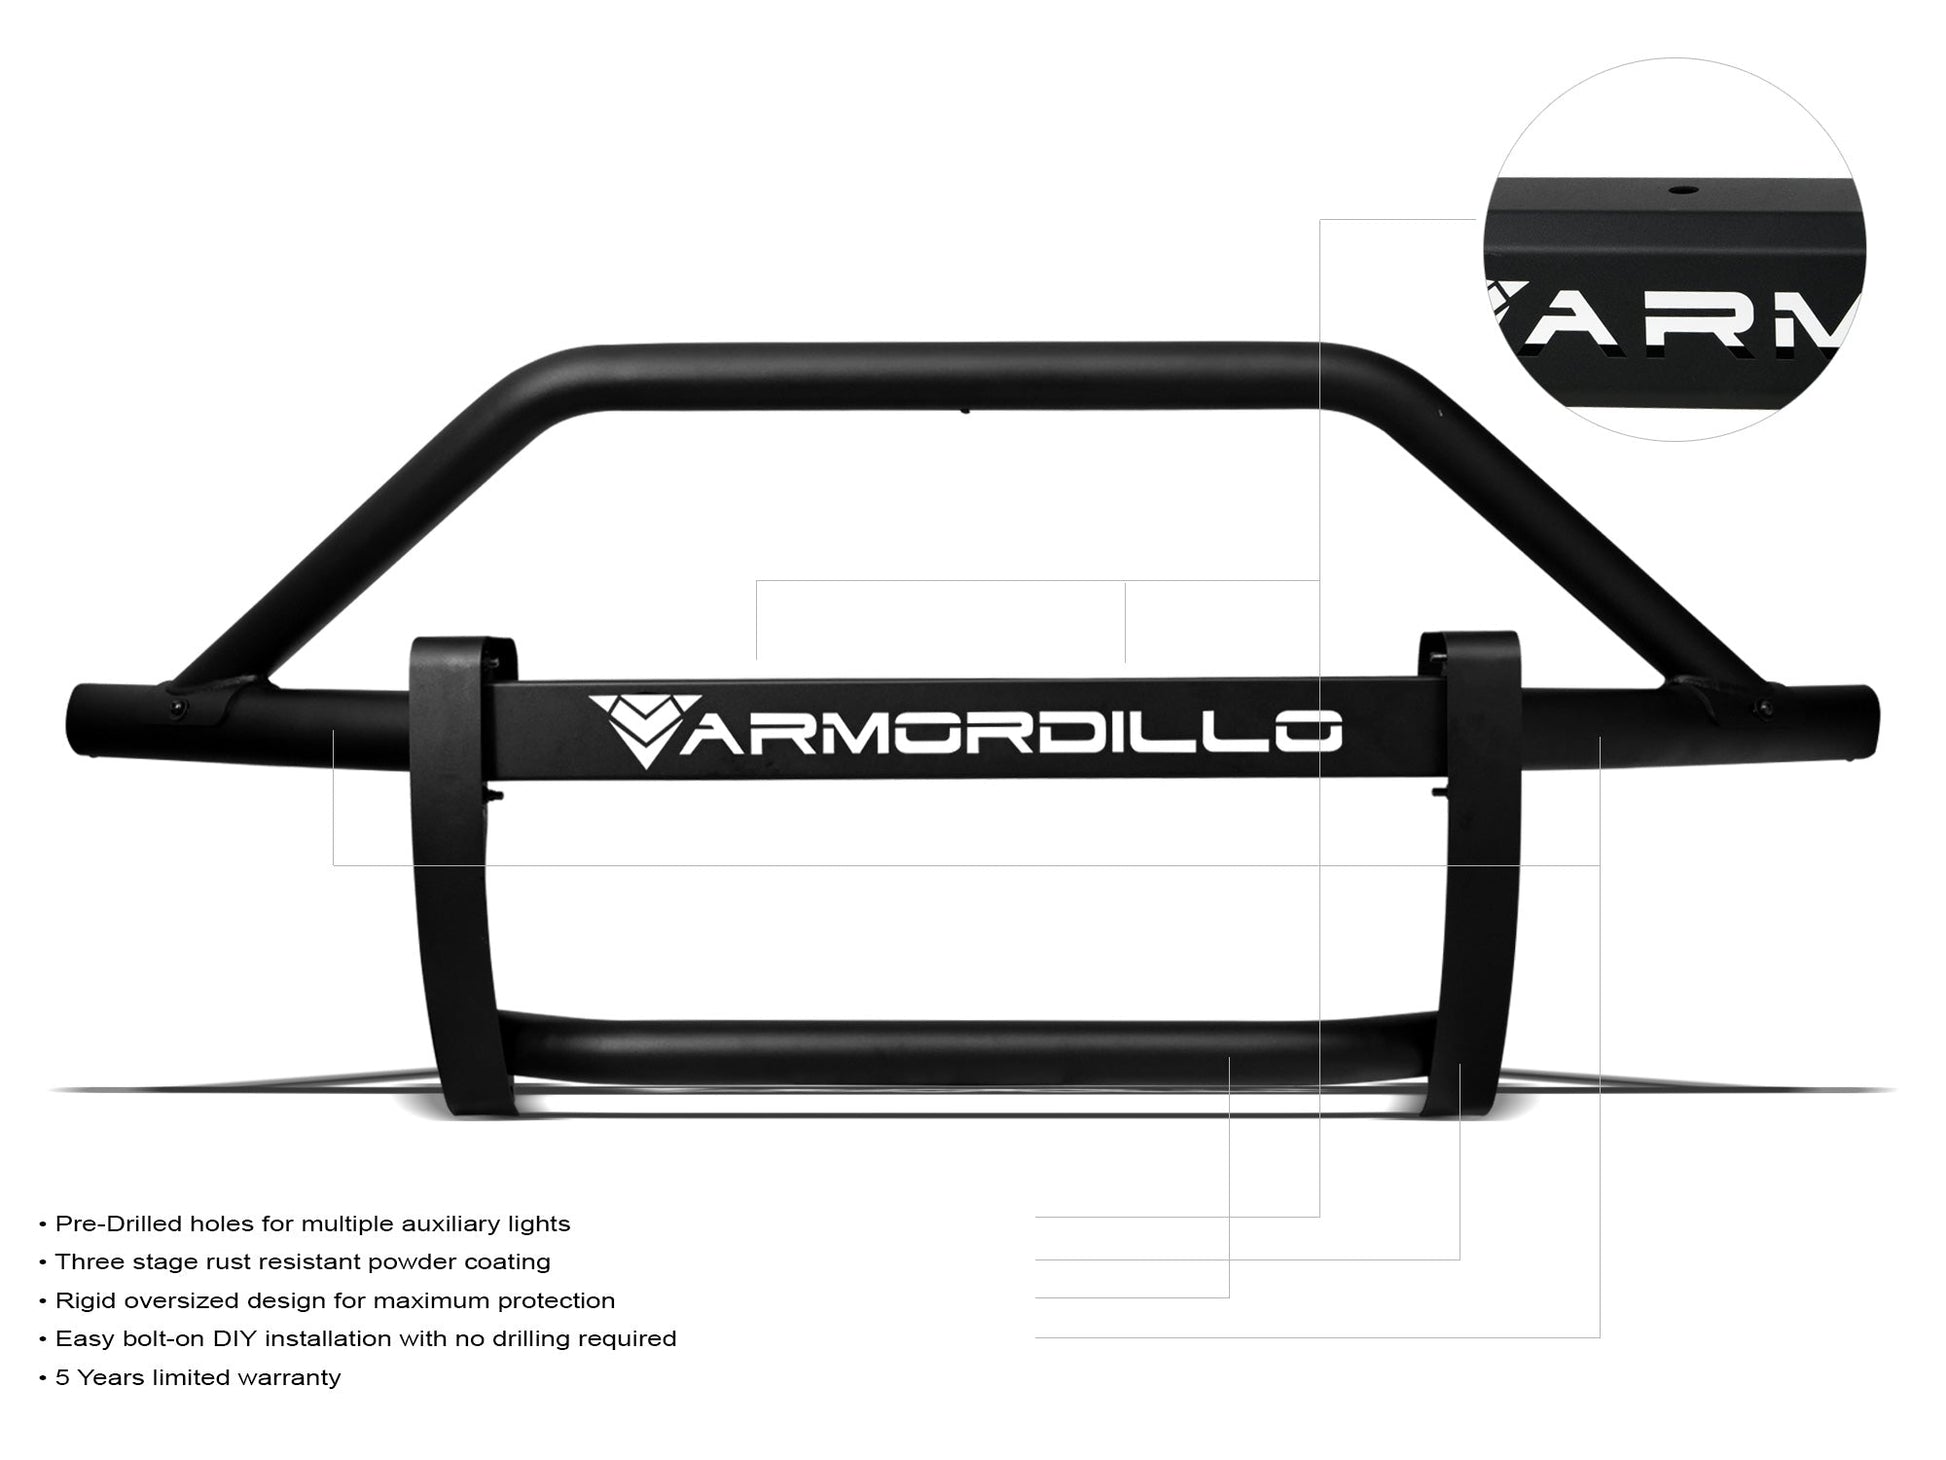 Armordillo 2014-2018 GMC Sierra 1500 AR Pre-Runner Guard - Matte Black - Bayson R Motorsports